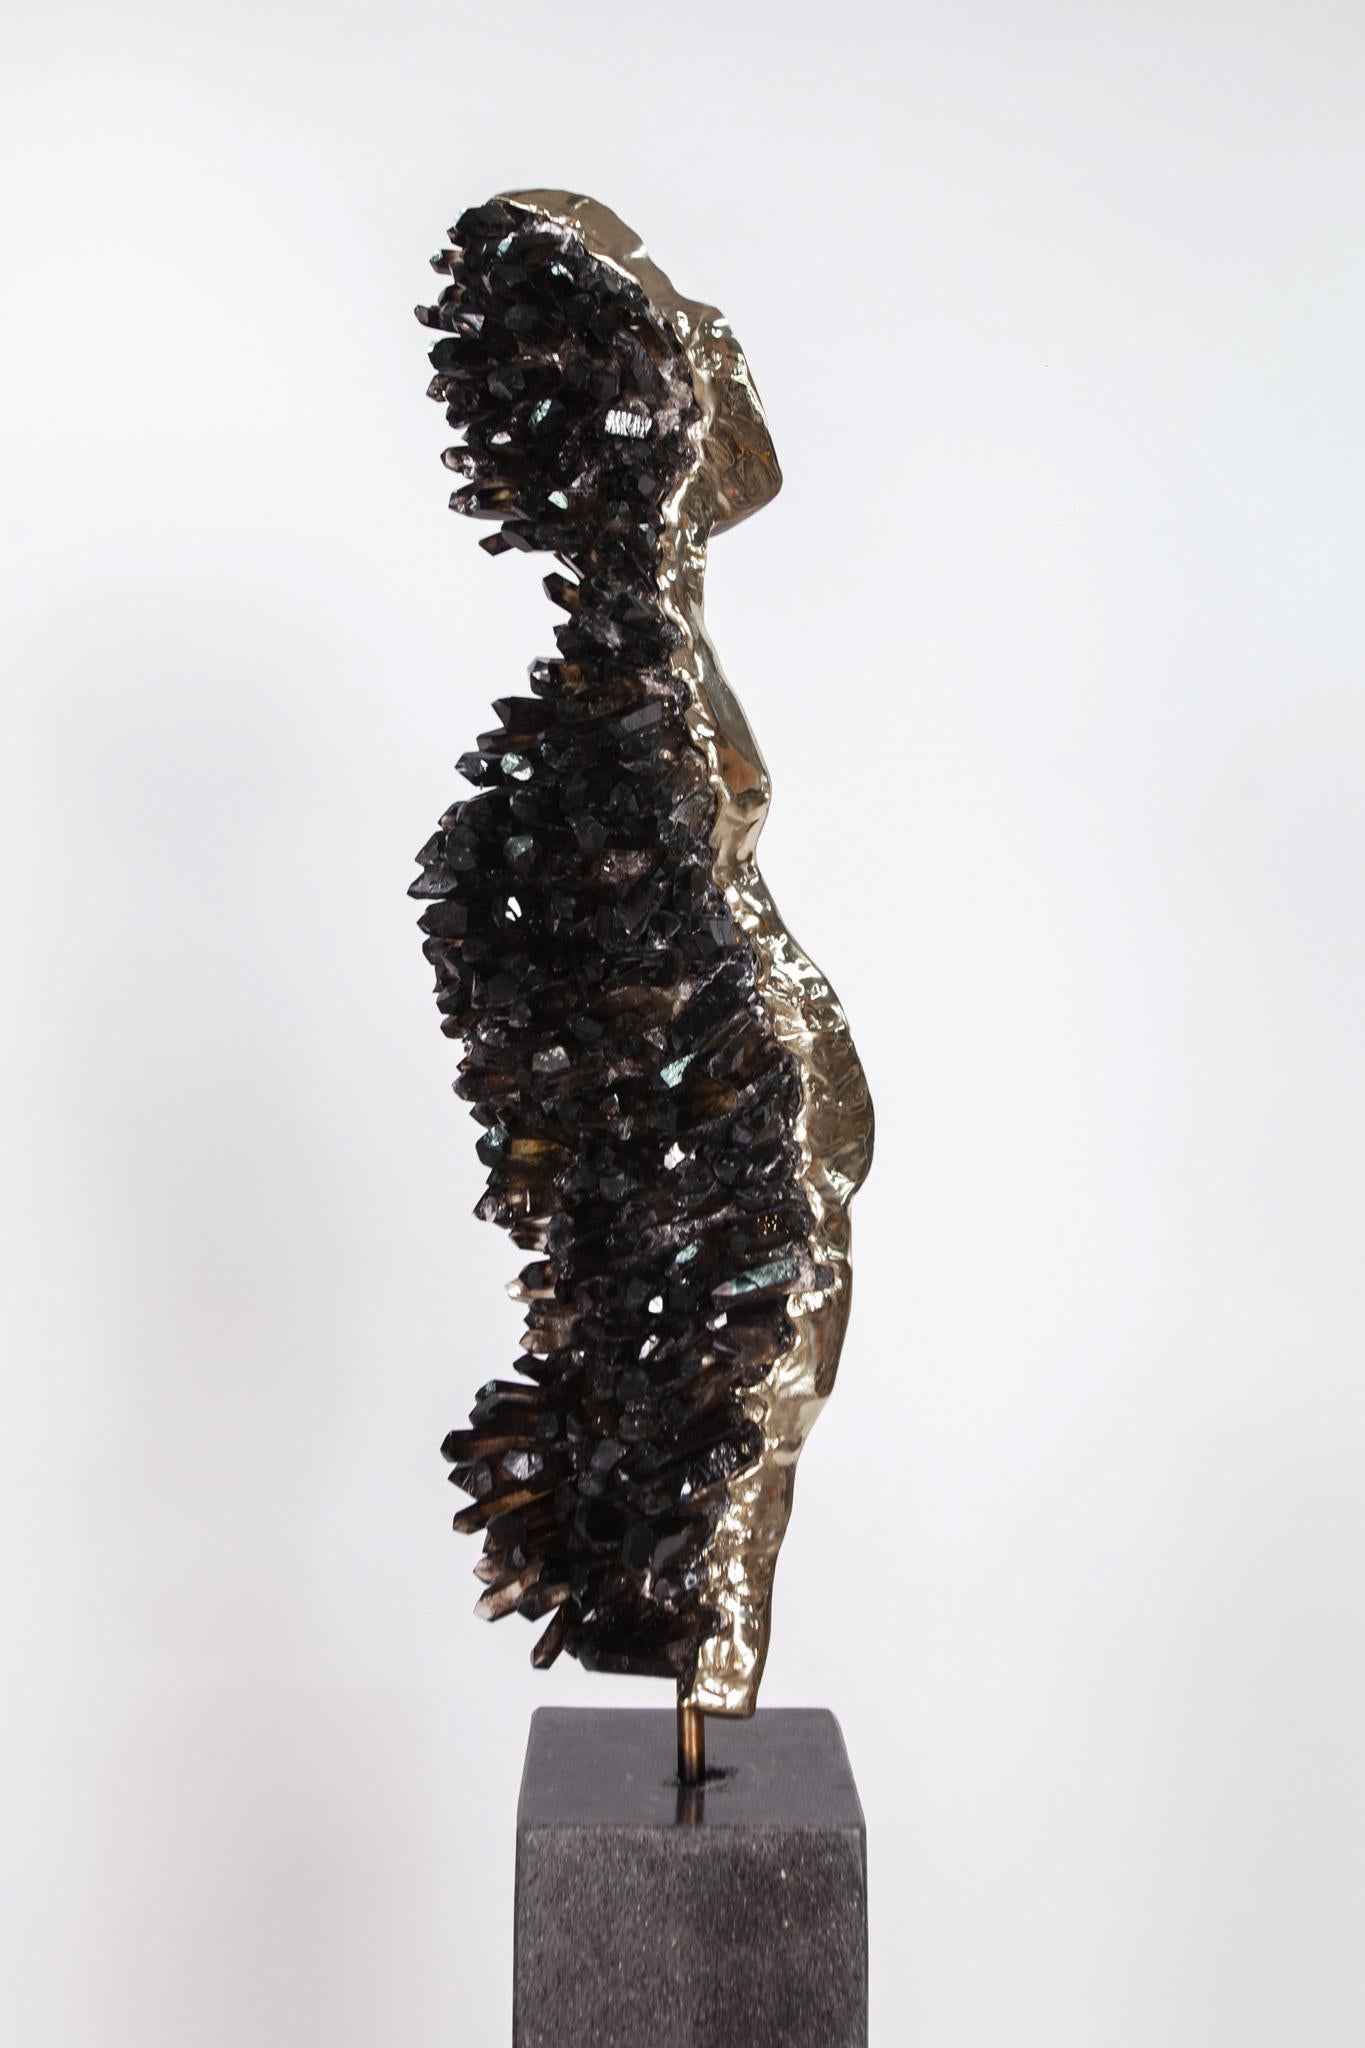 LIMINAL STATE  Smokey quartz crystals, bronze sculpture For Sale 9